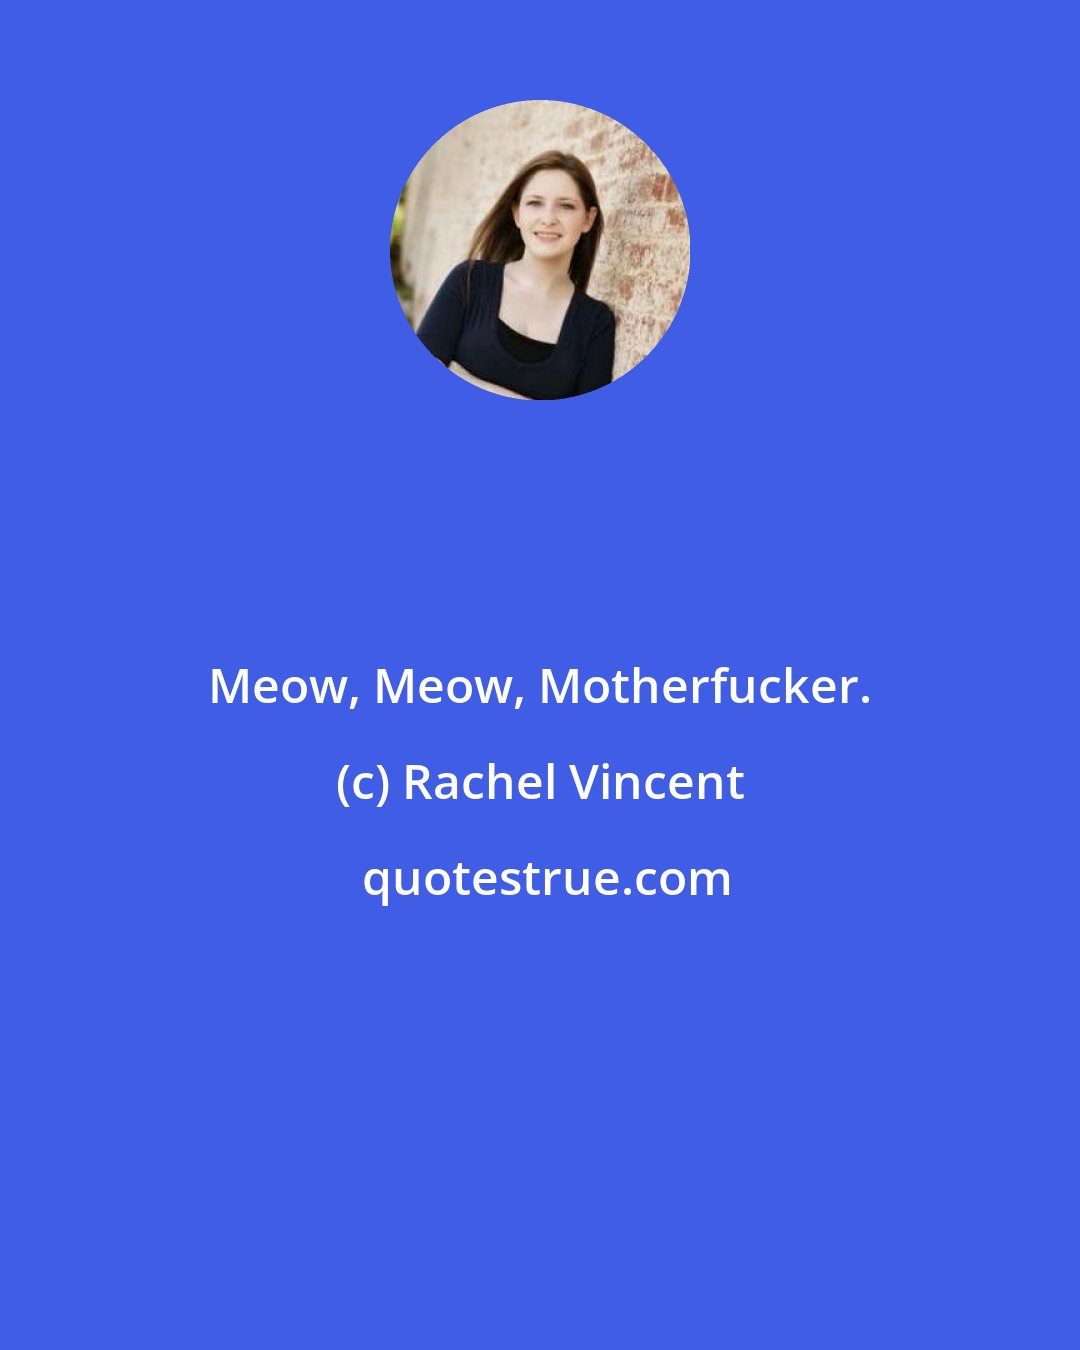 Rachel Vincent: Meow, Meow, Motherfucker.